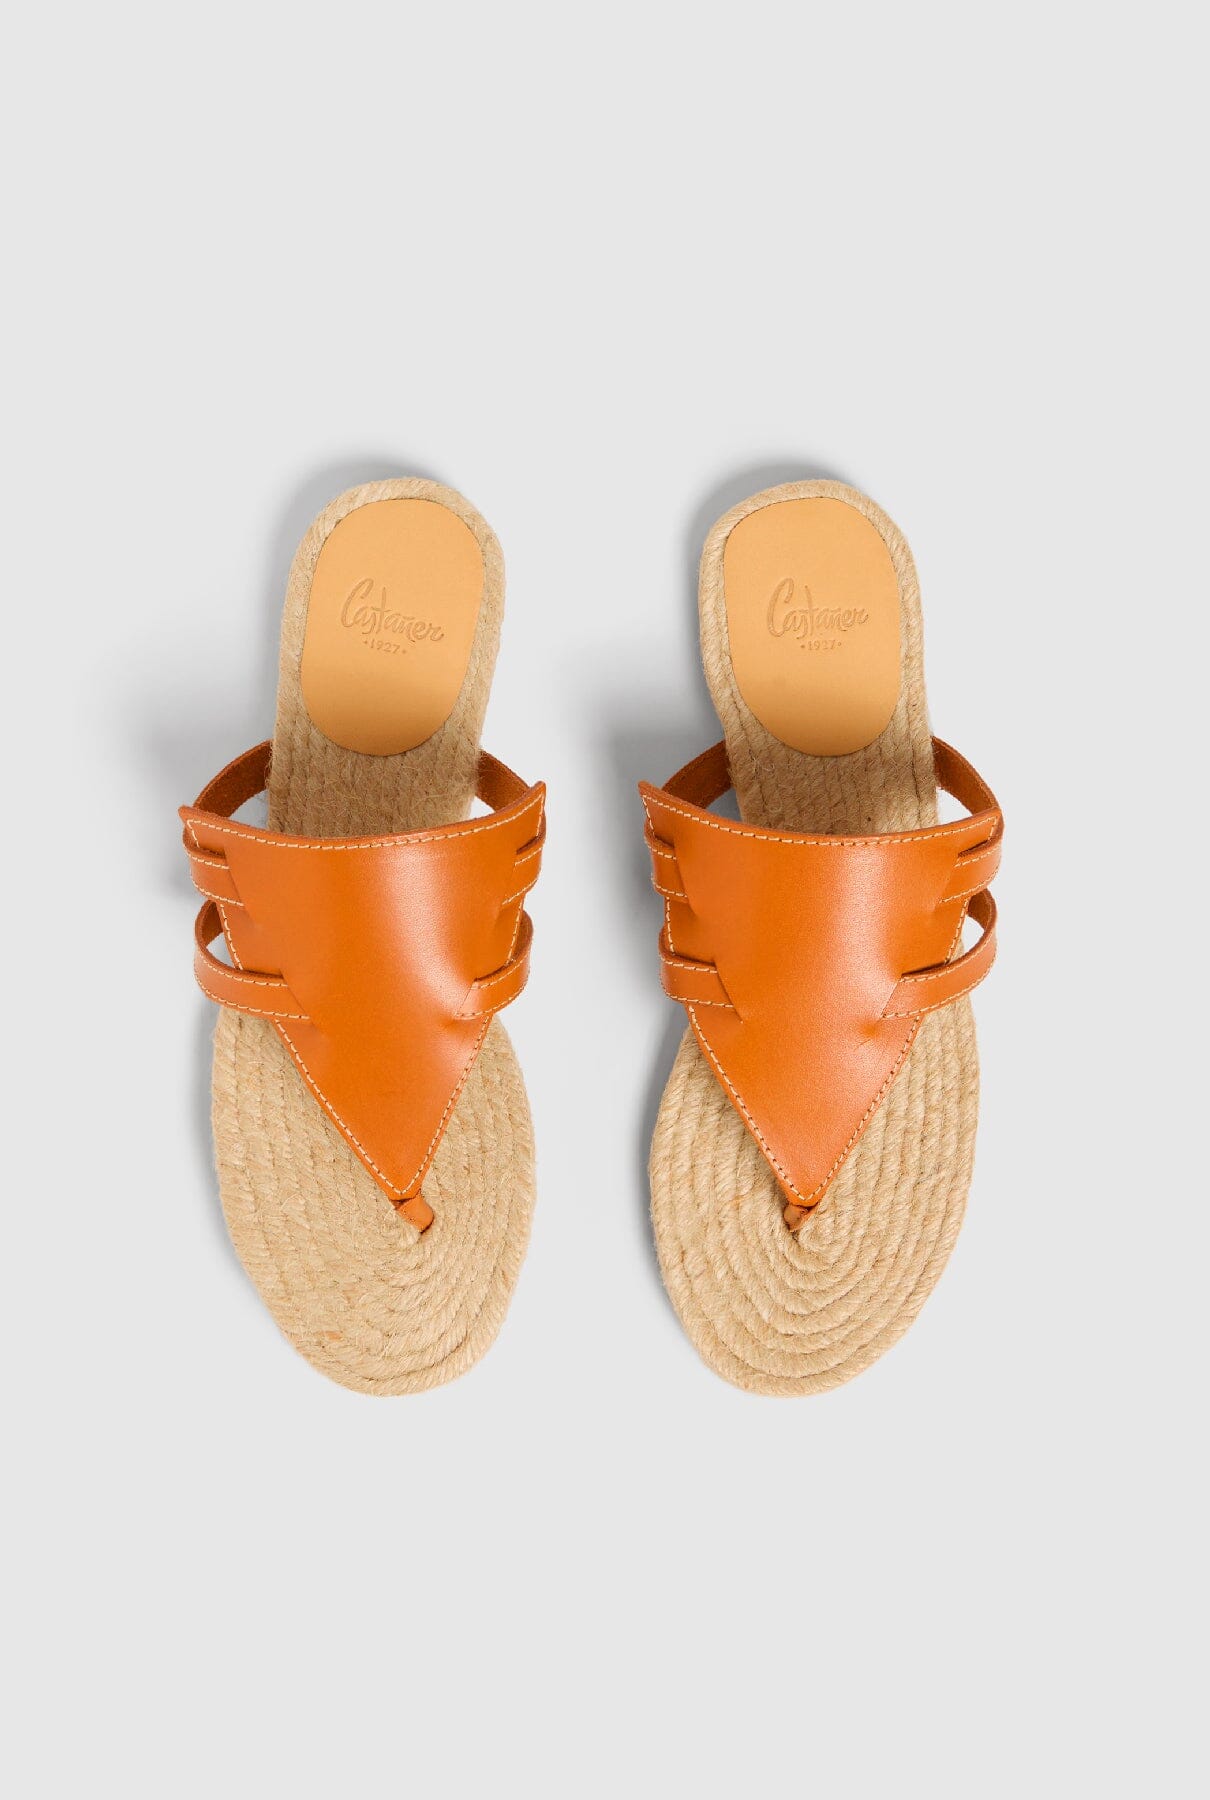 PIARA/187 CUERO Flat sandals Castañer 